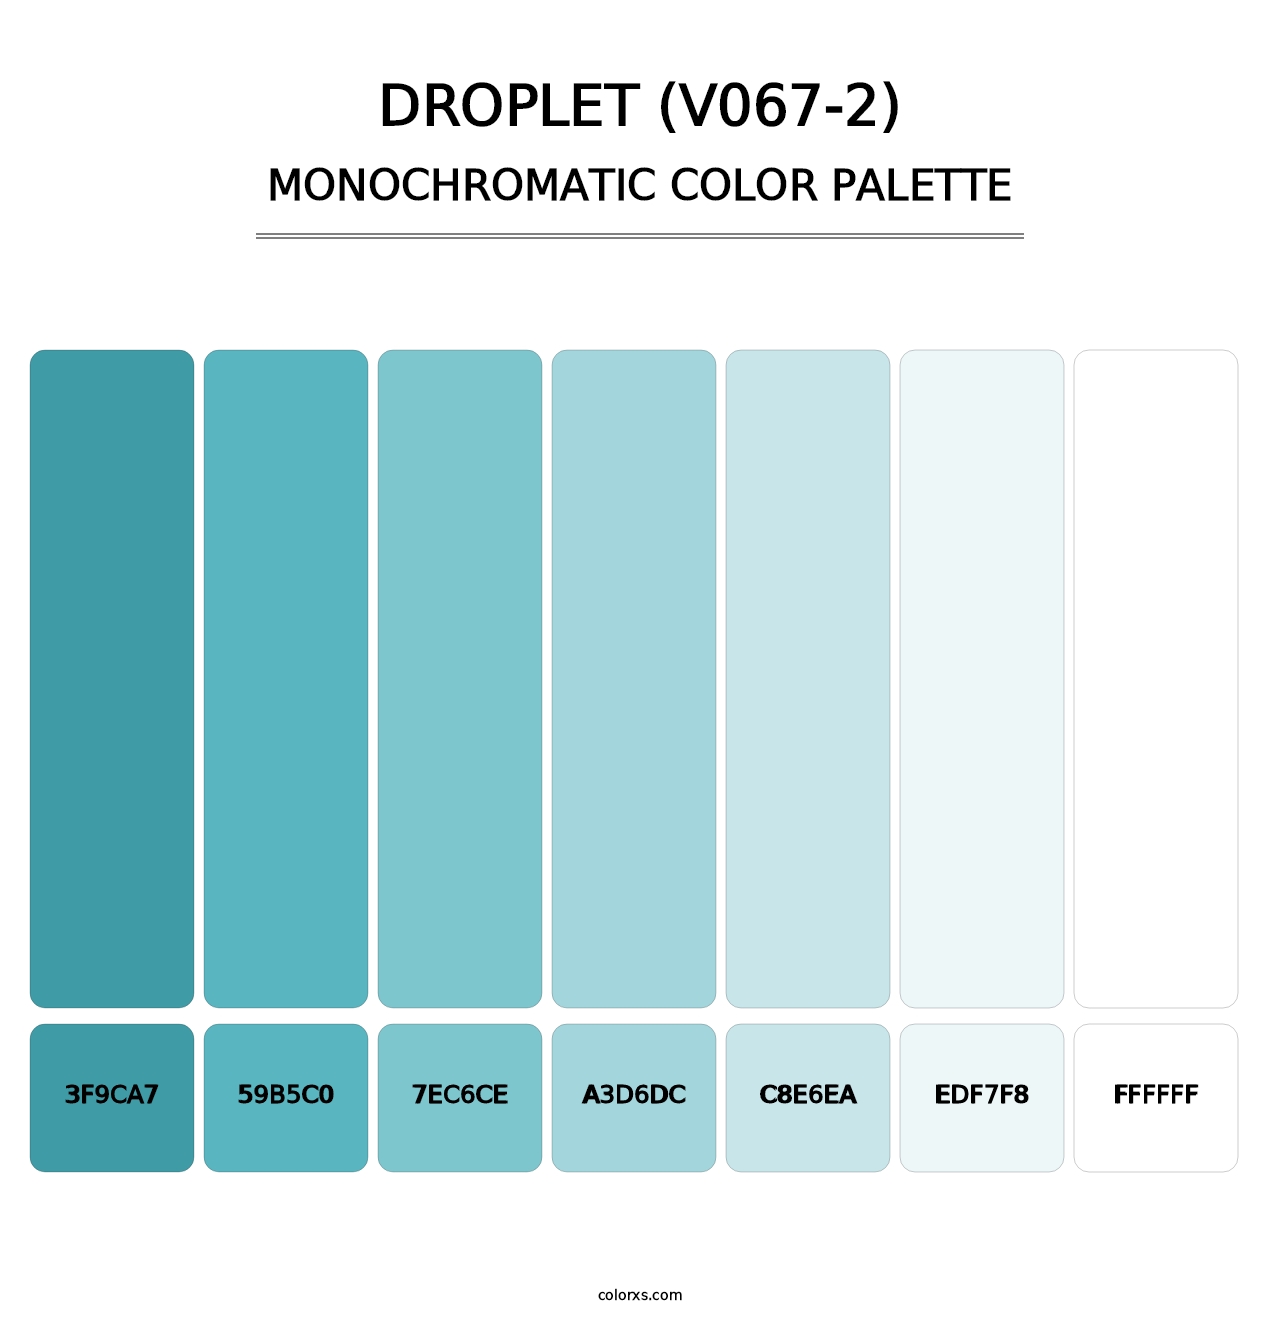 Droplet (V067-2) - Monochromatic Color Palette